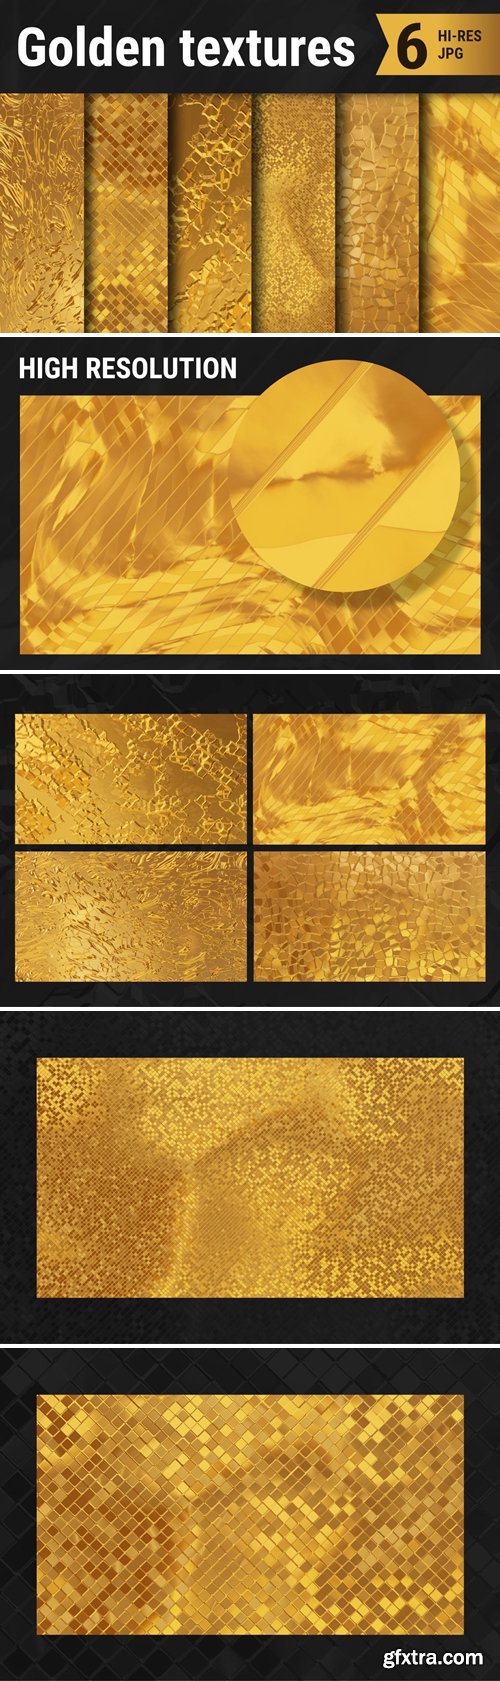 Golden Textures | Collection